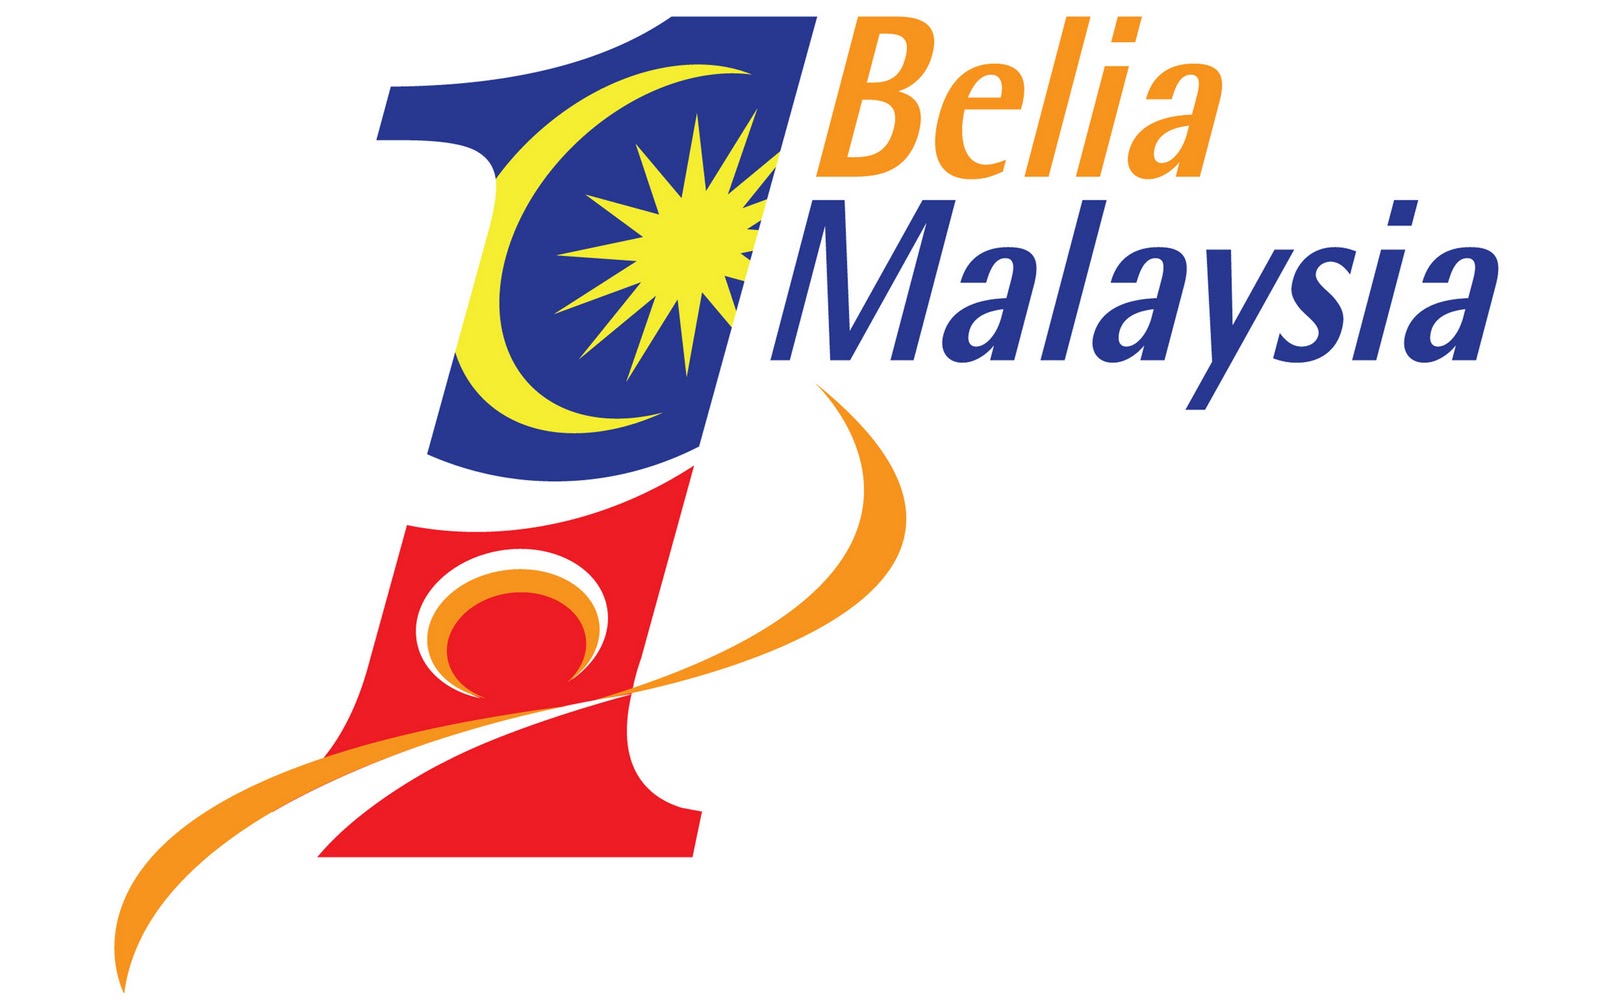 Koleksi Gambar Logo 1Malaysia - JIWAROSAK.COM